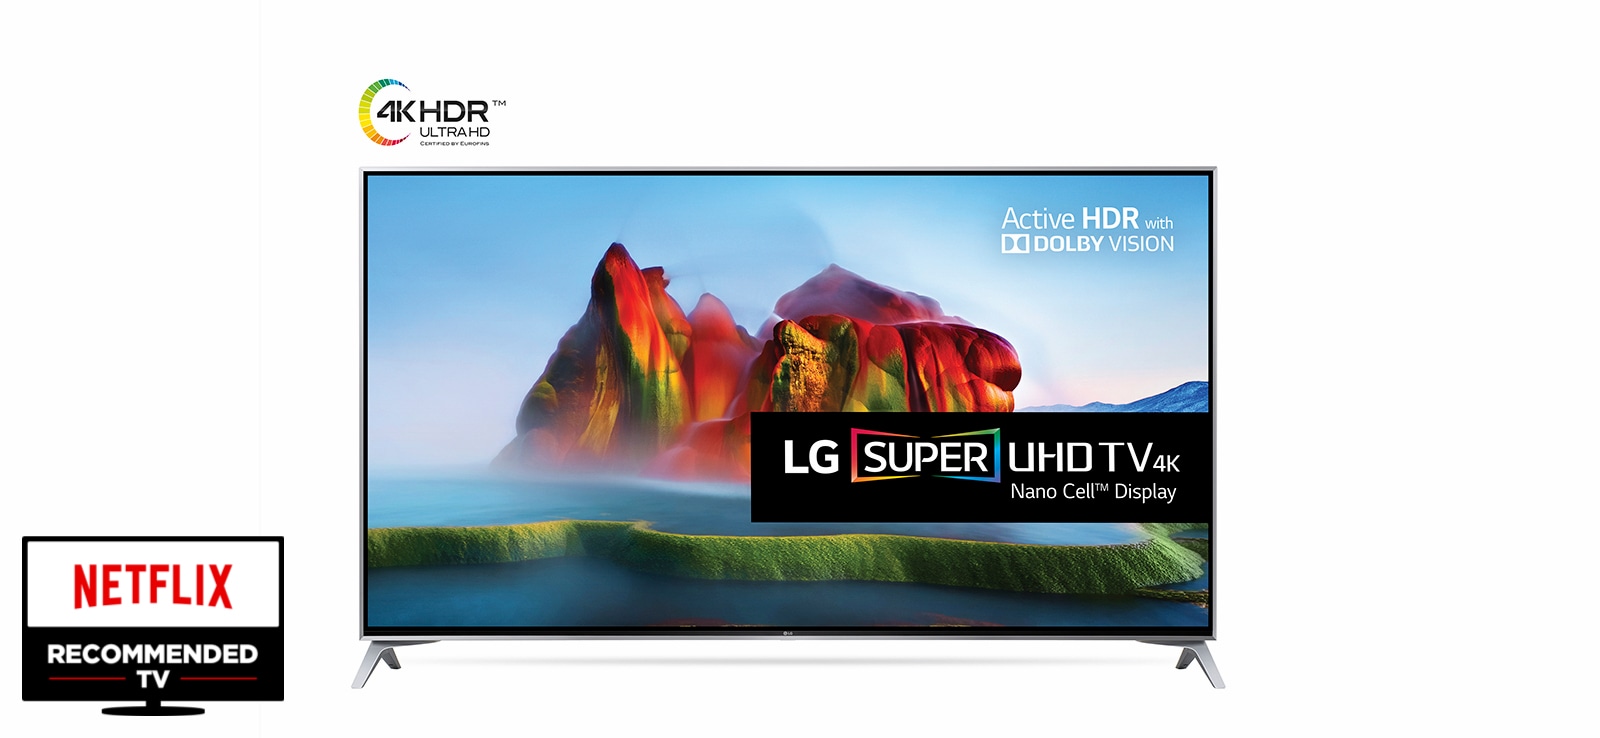 LG 60'' (152 cm) SUPER Ultra HD televizor s IPS 4K Nano Cell™ Display zaslonom, Active HDR - Dolby Vision tehnologijom, webOS 3.5 i harman/kardon®audio sustavom, 60SJ800V